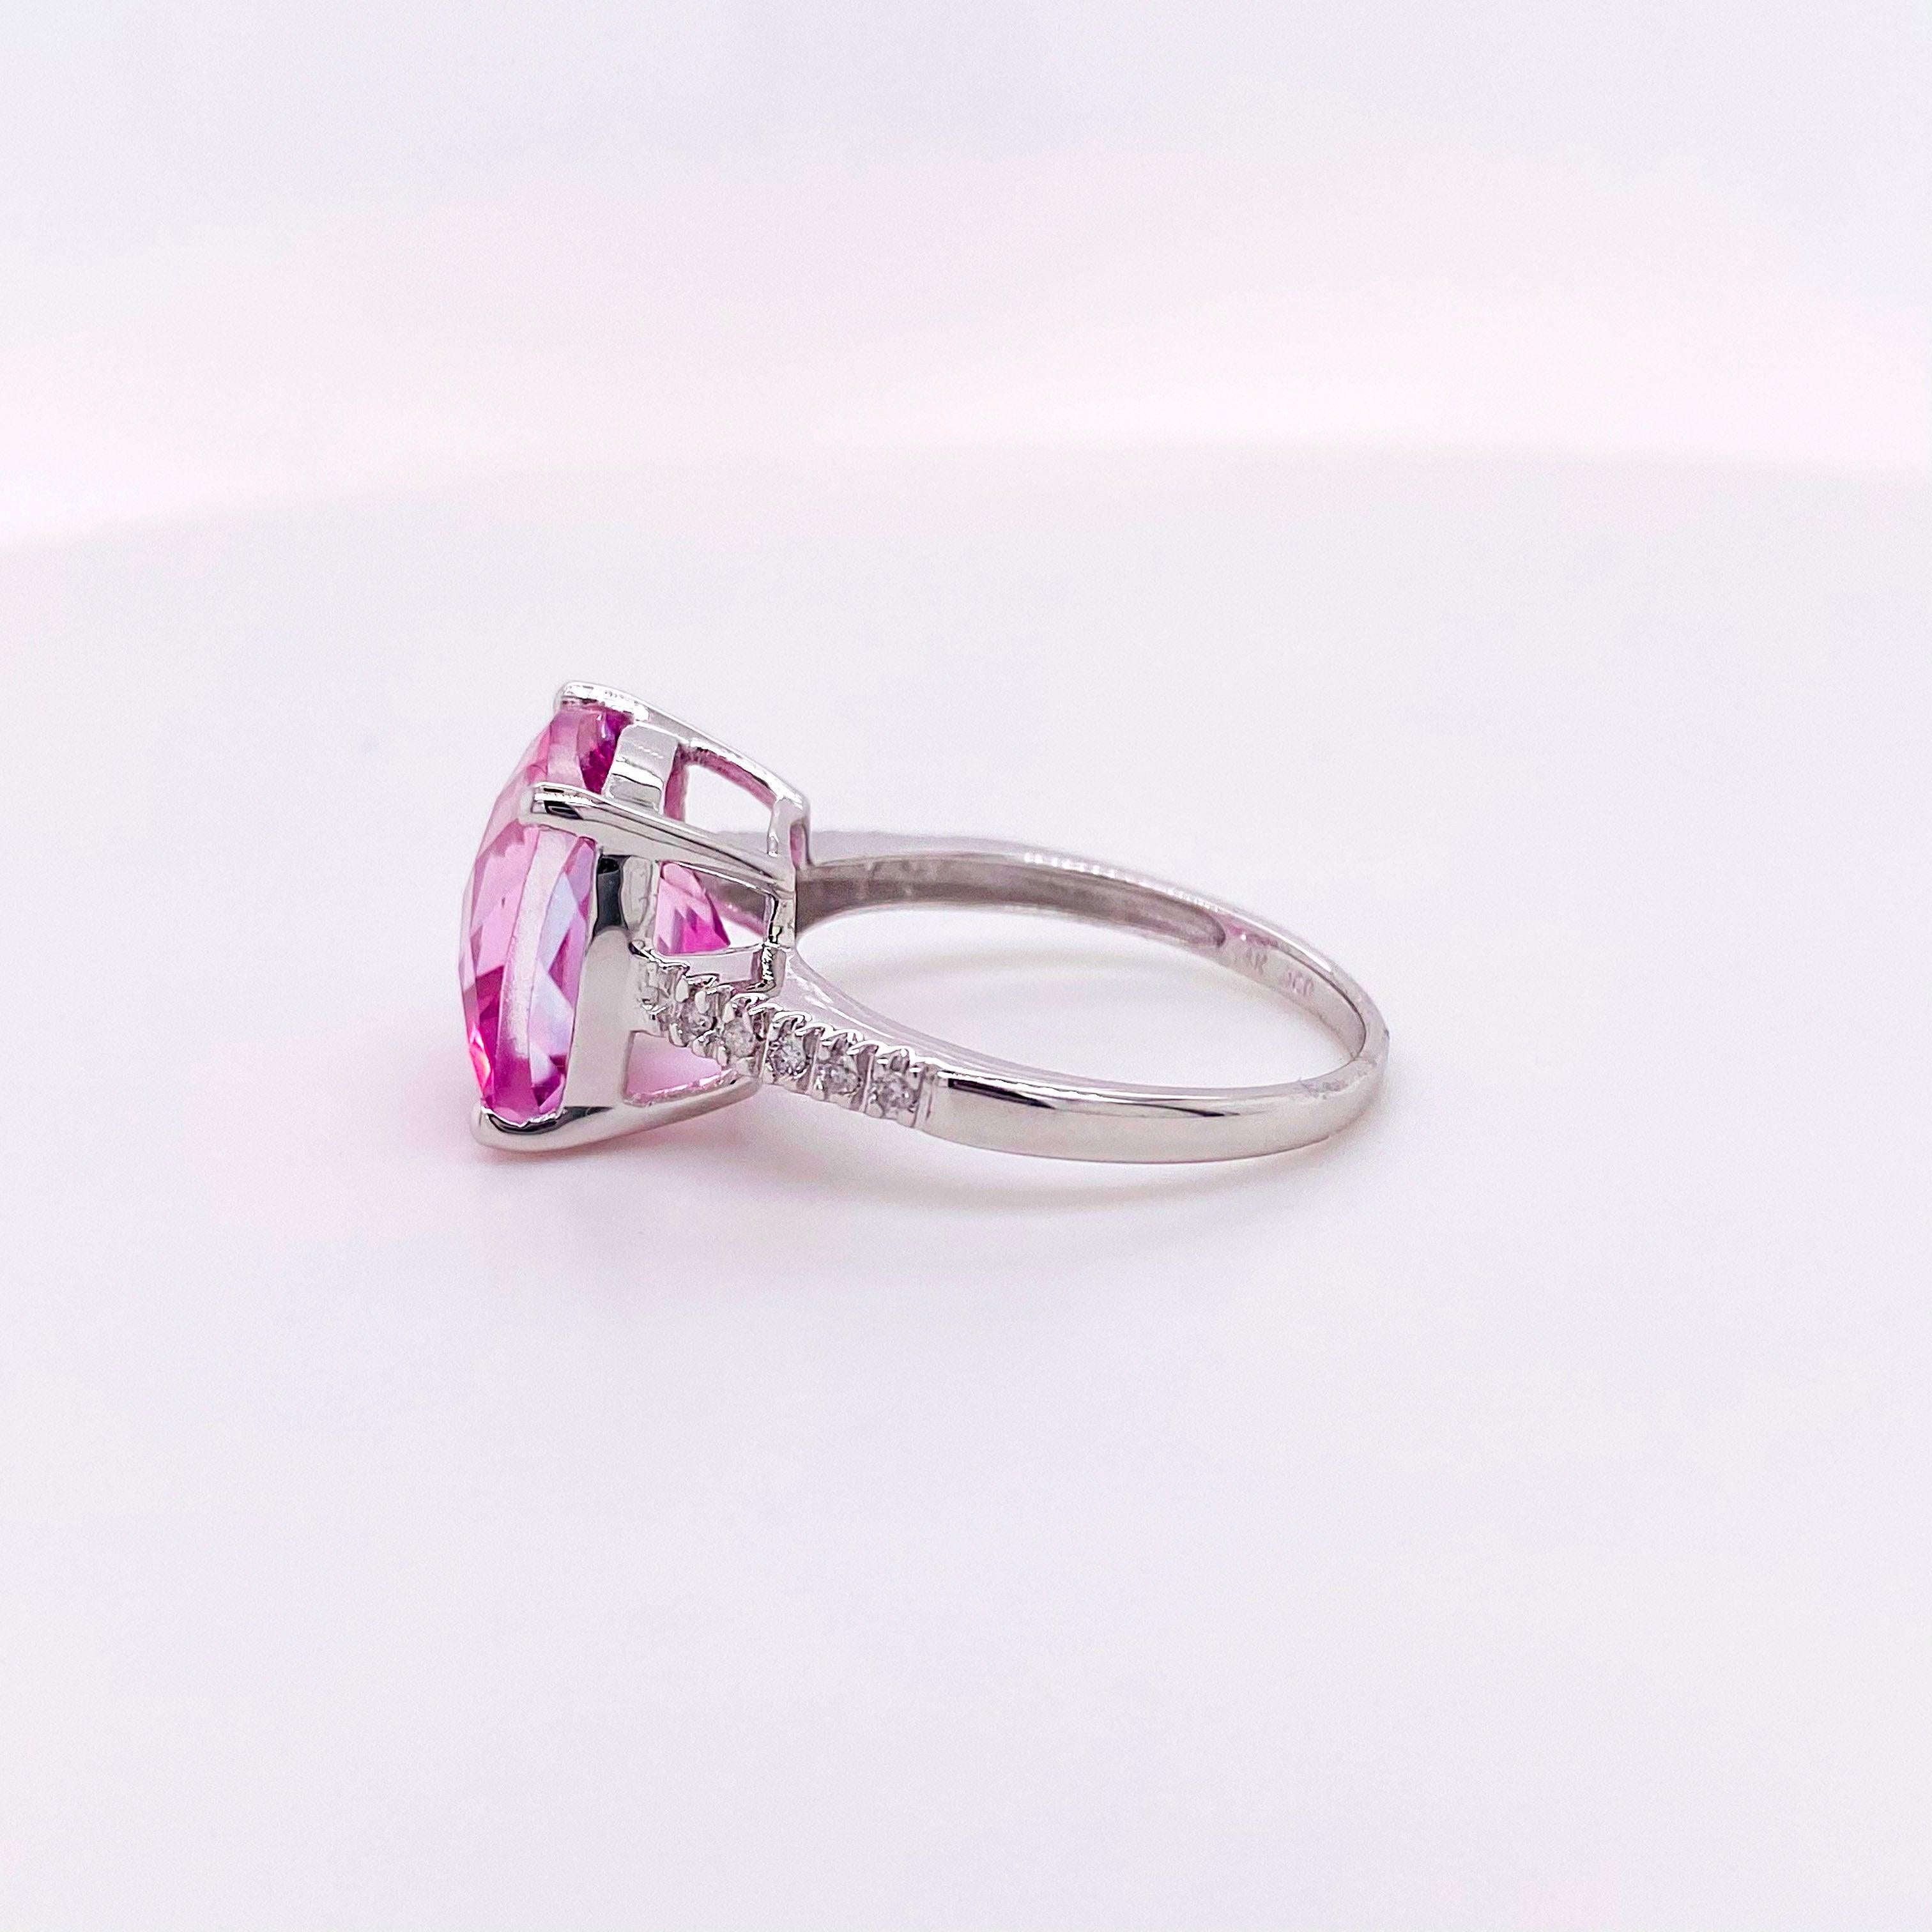 For Sale:  8 Carat Pink Topaz and Diamond Ring 14 Karat White Gold Cushion Cut Pink Topaz 6